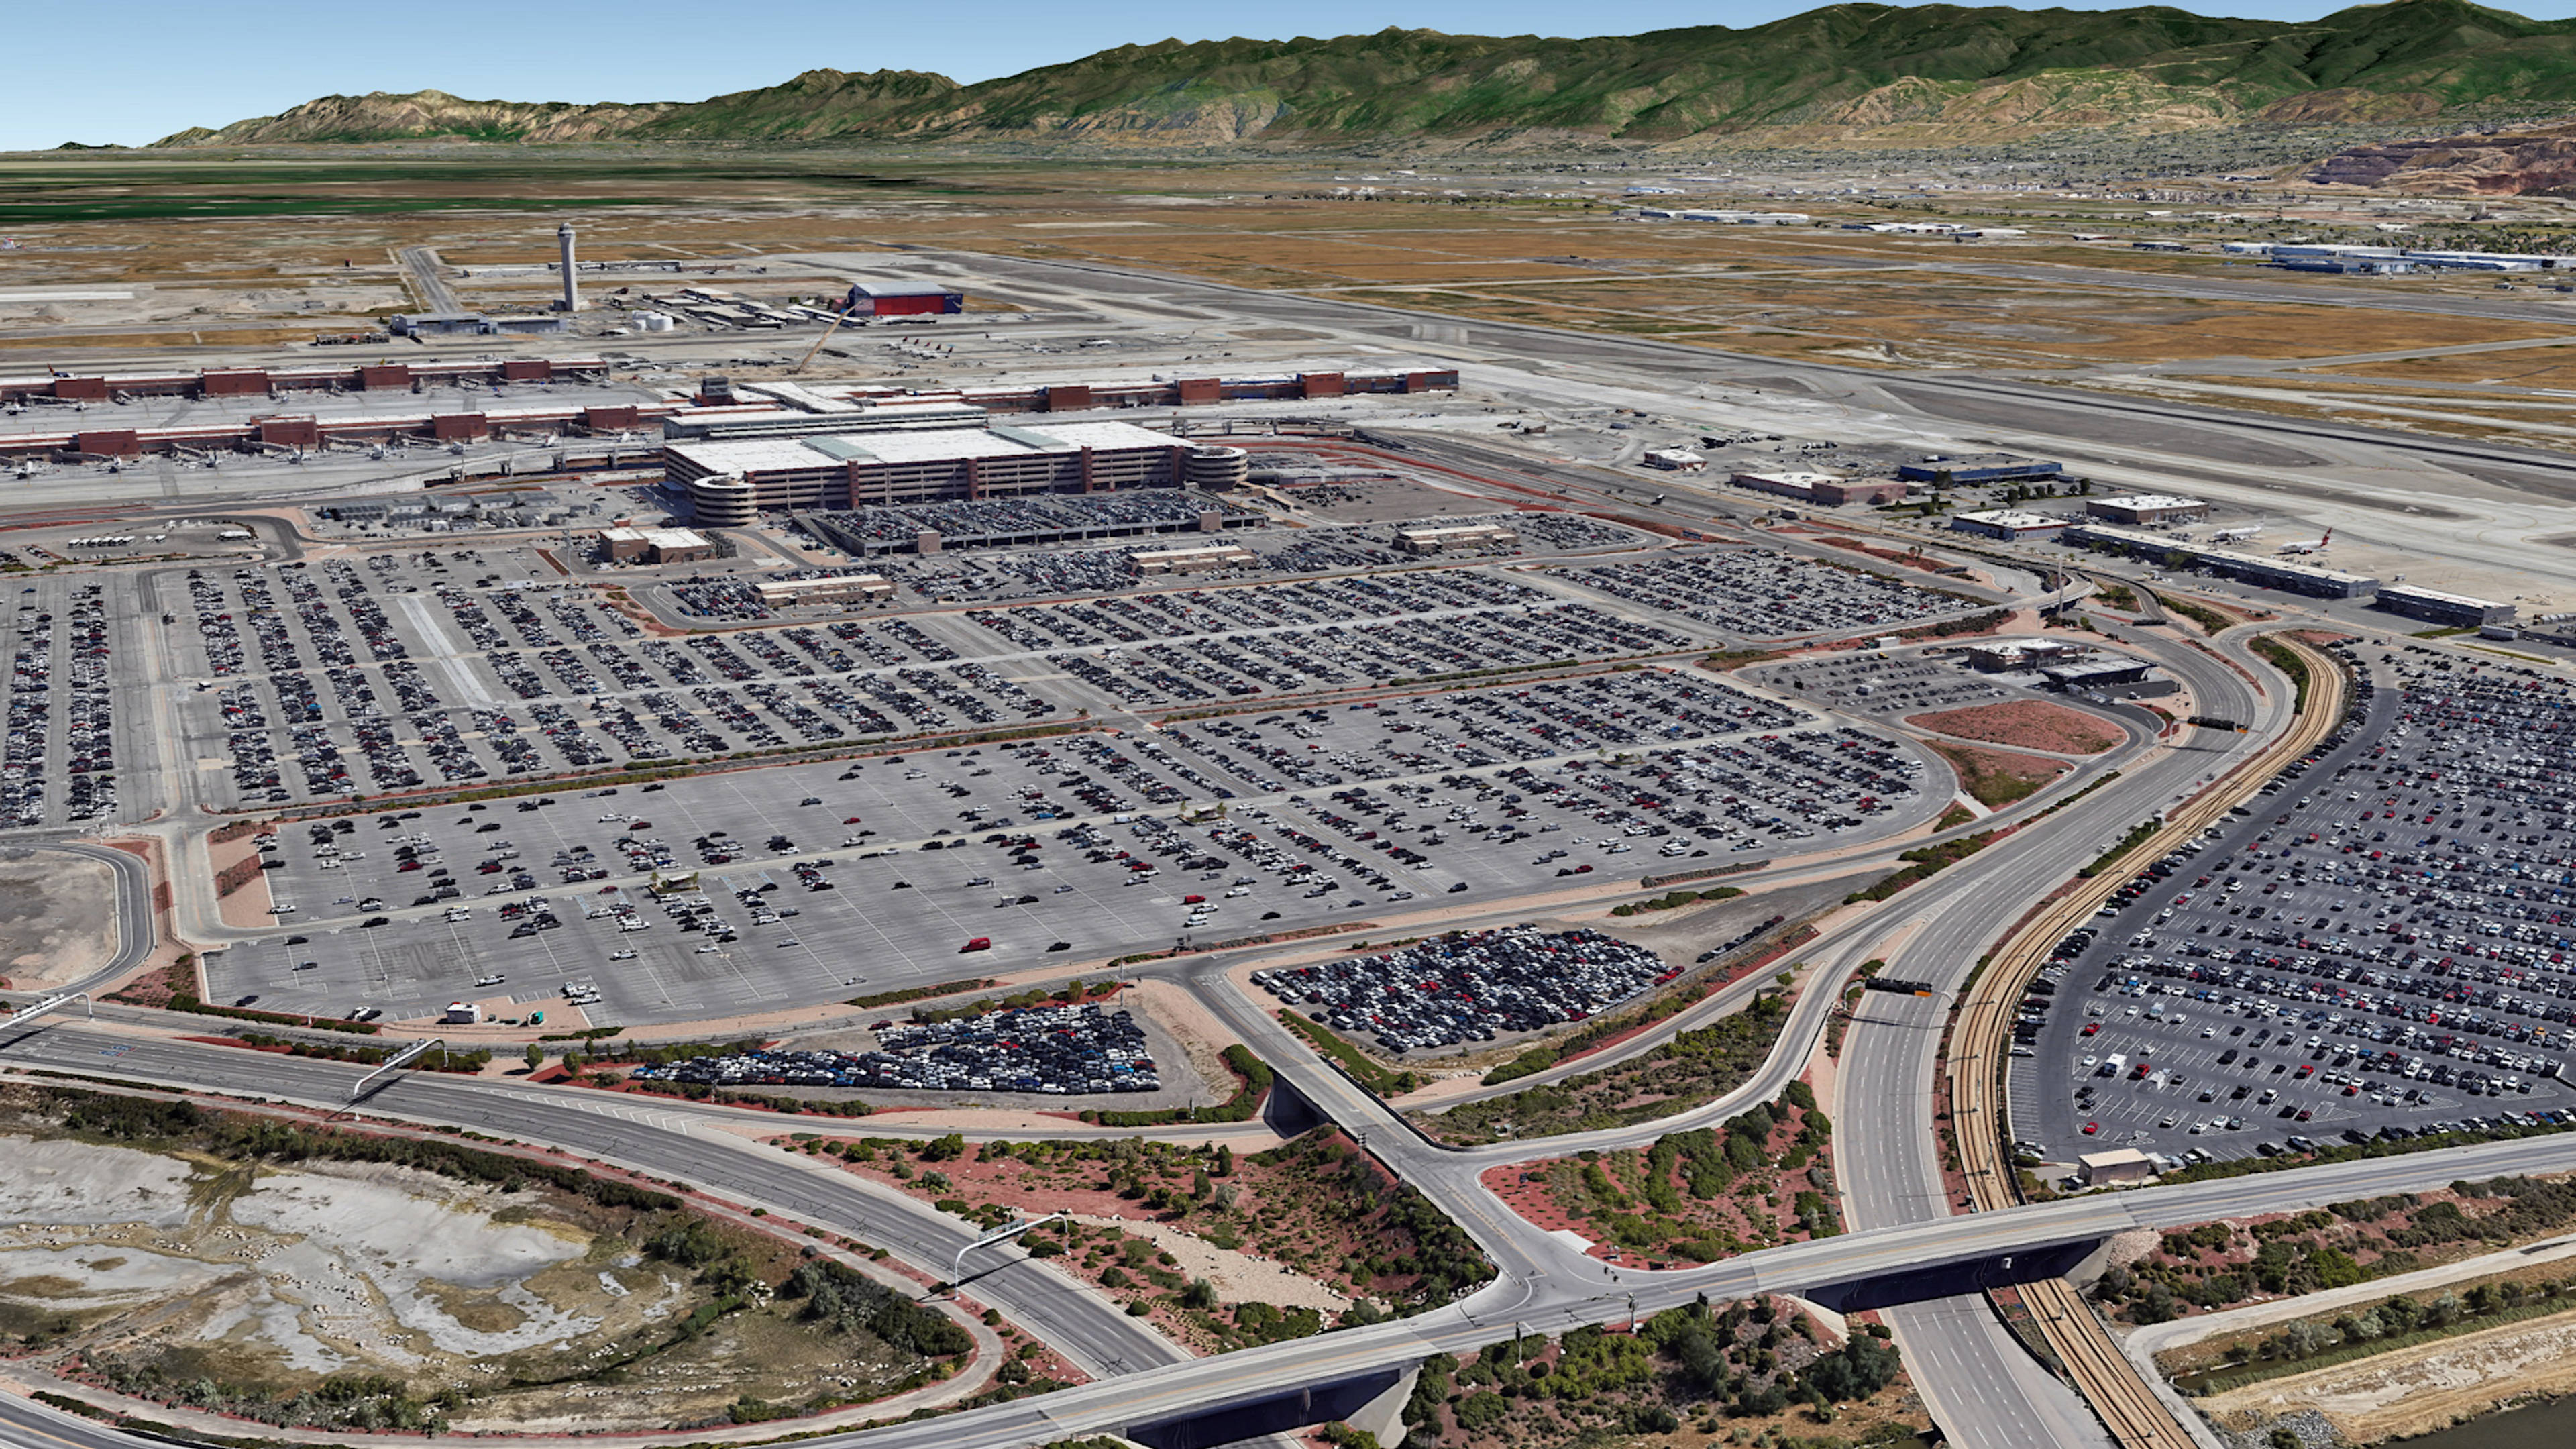  Aerial View of Salt Lake City Airport Parking